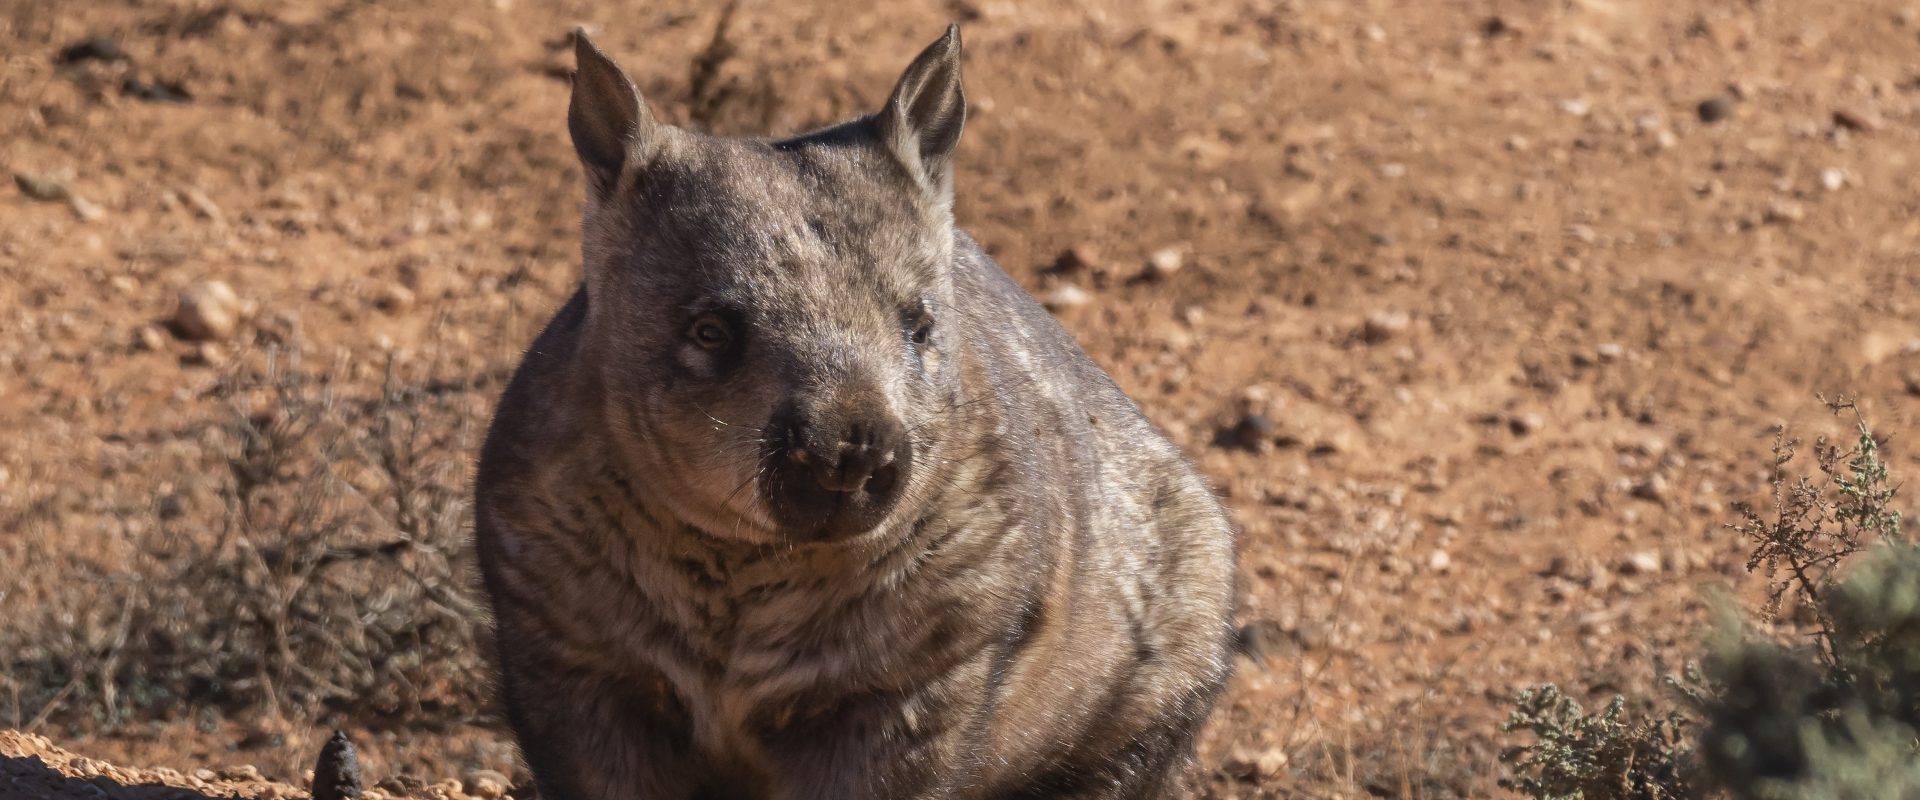 Help protect Australia's endangered native animals! | Animals Australia